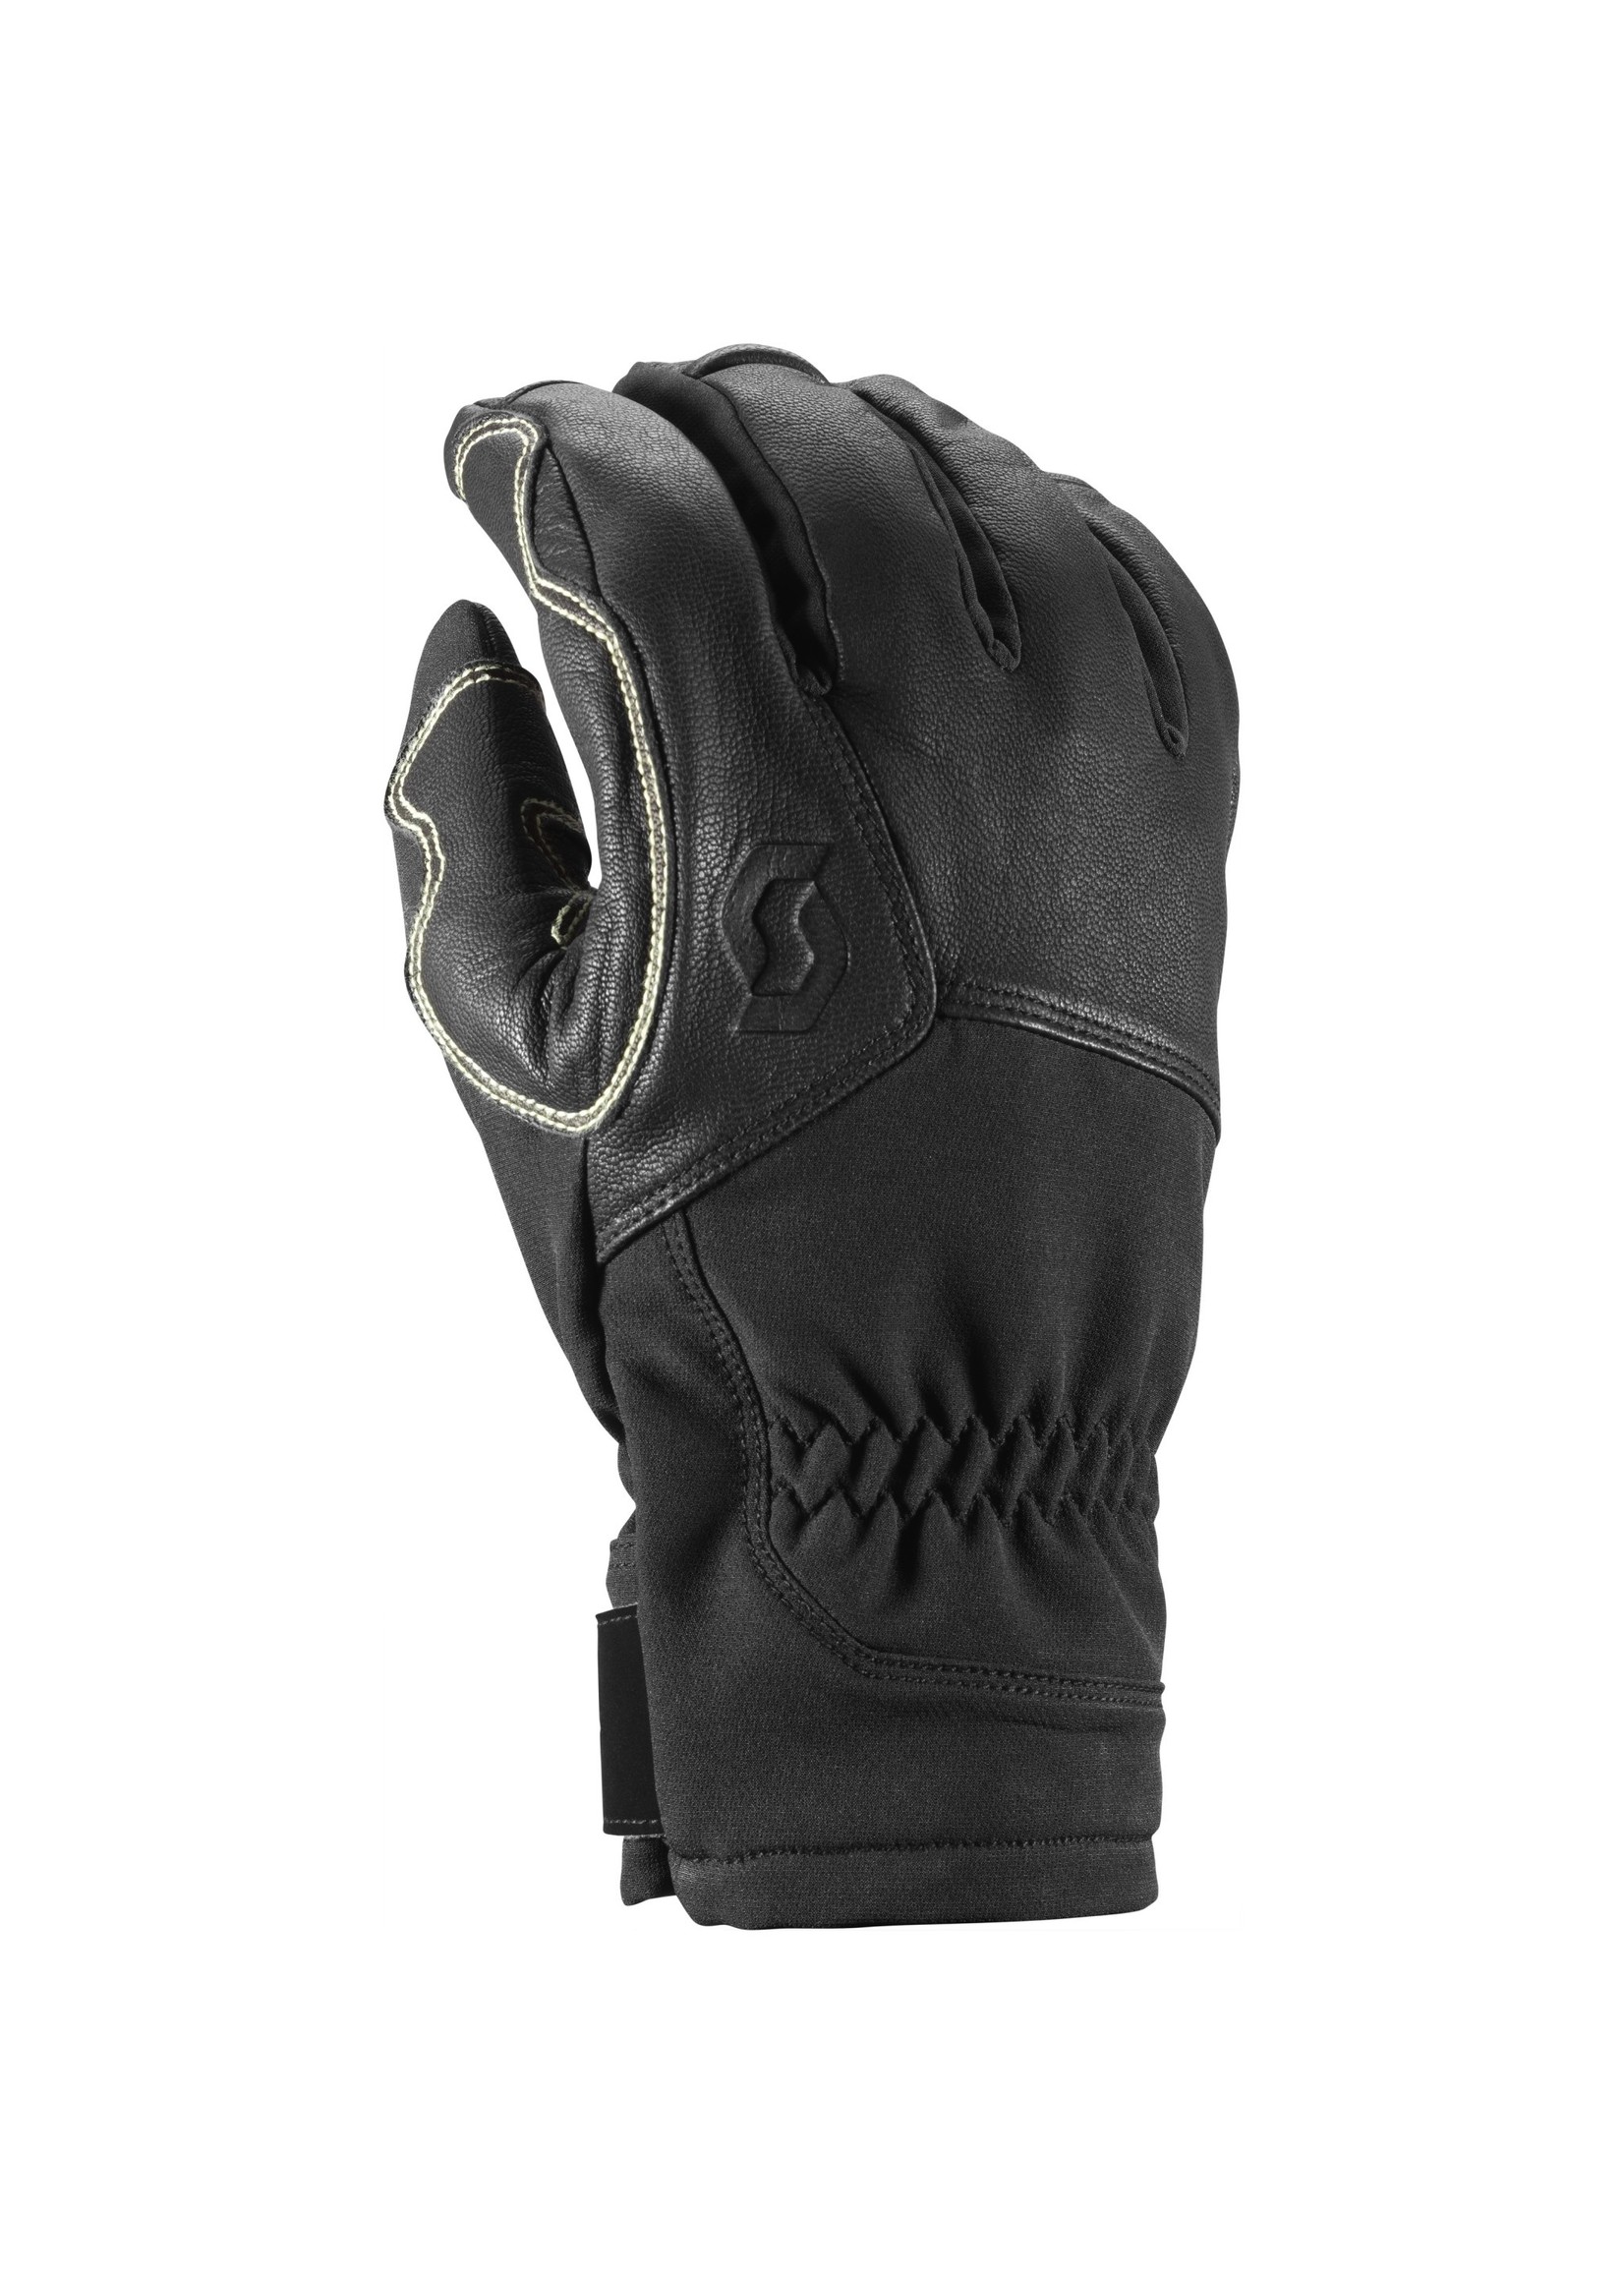 Scott Alpine Glove Explorair Premium GTX